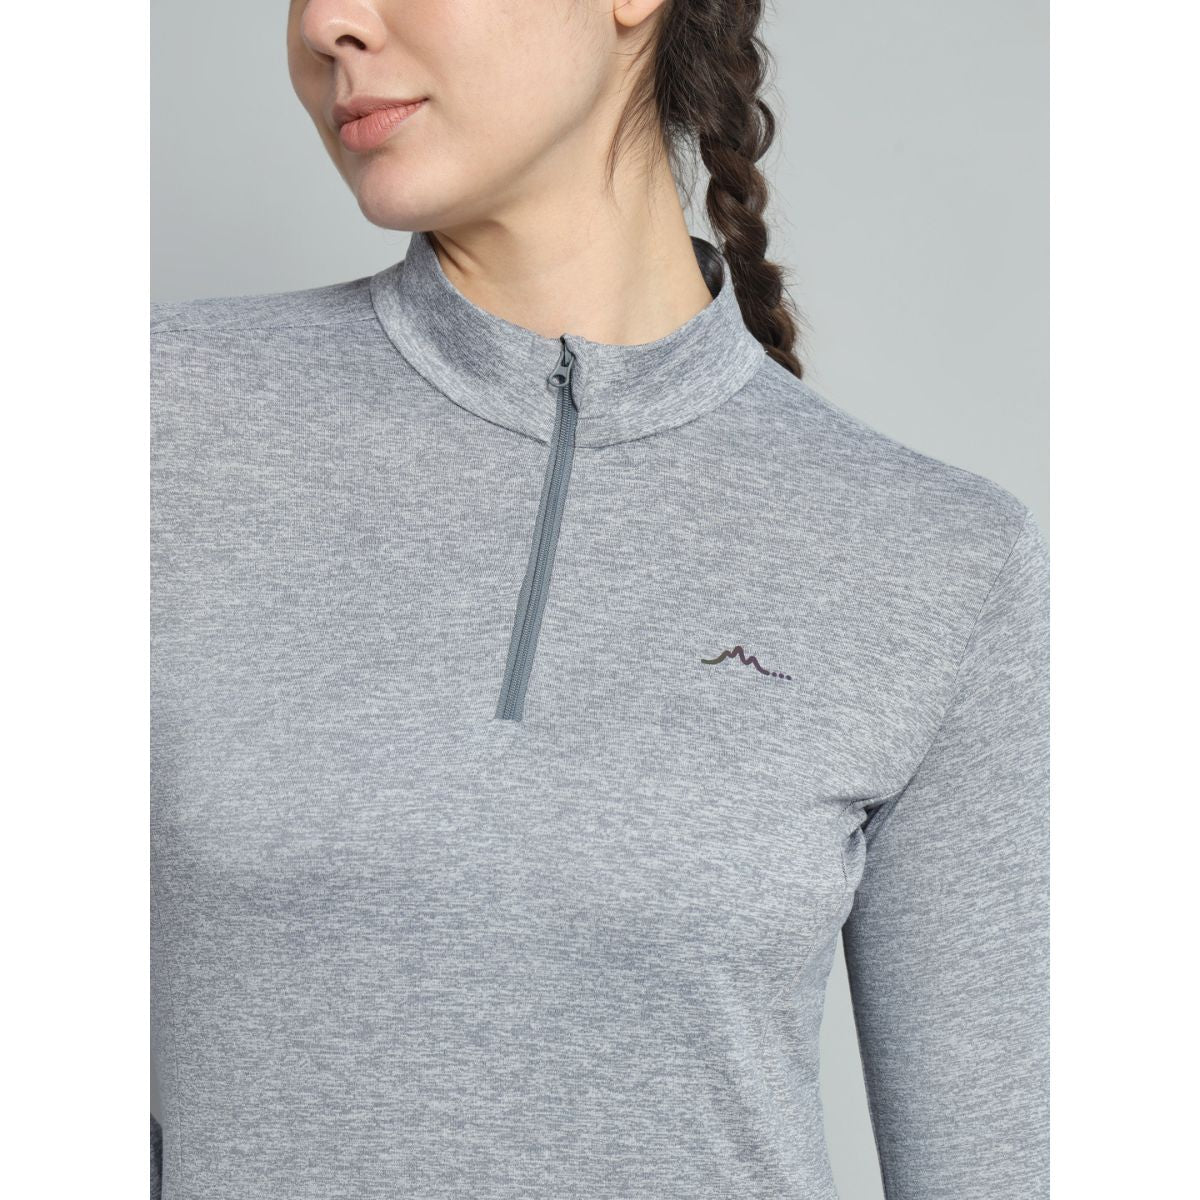 Women's Nomadic Full Sleeves T-Shirt / Baselayer - Silver Gray 5